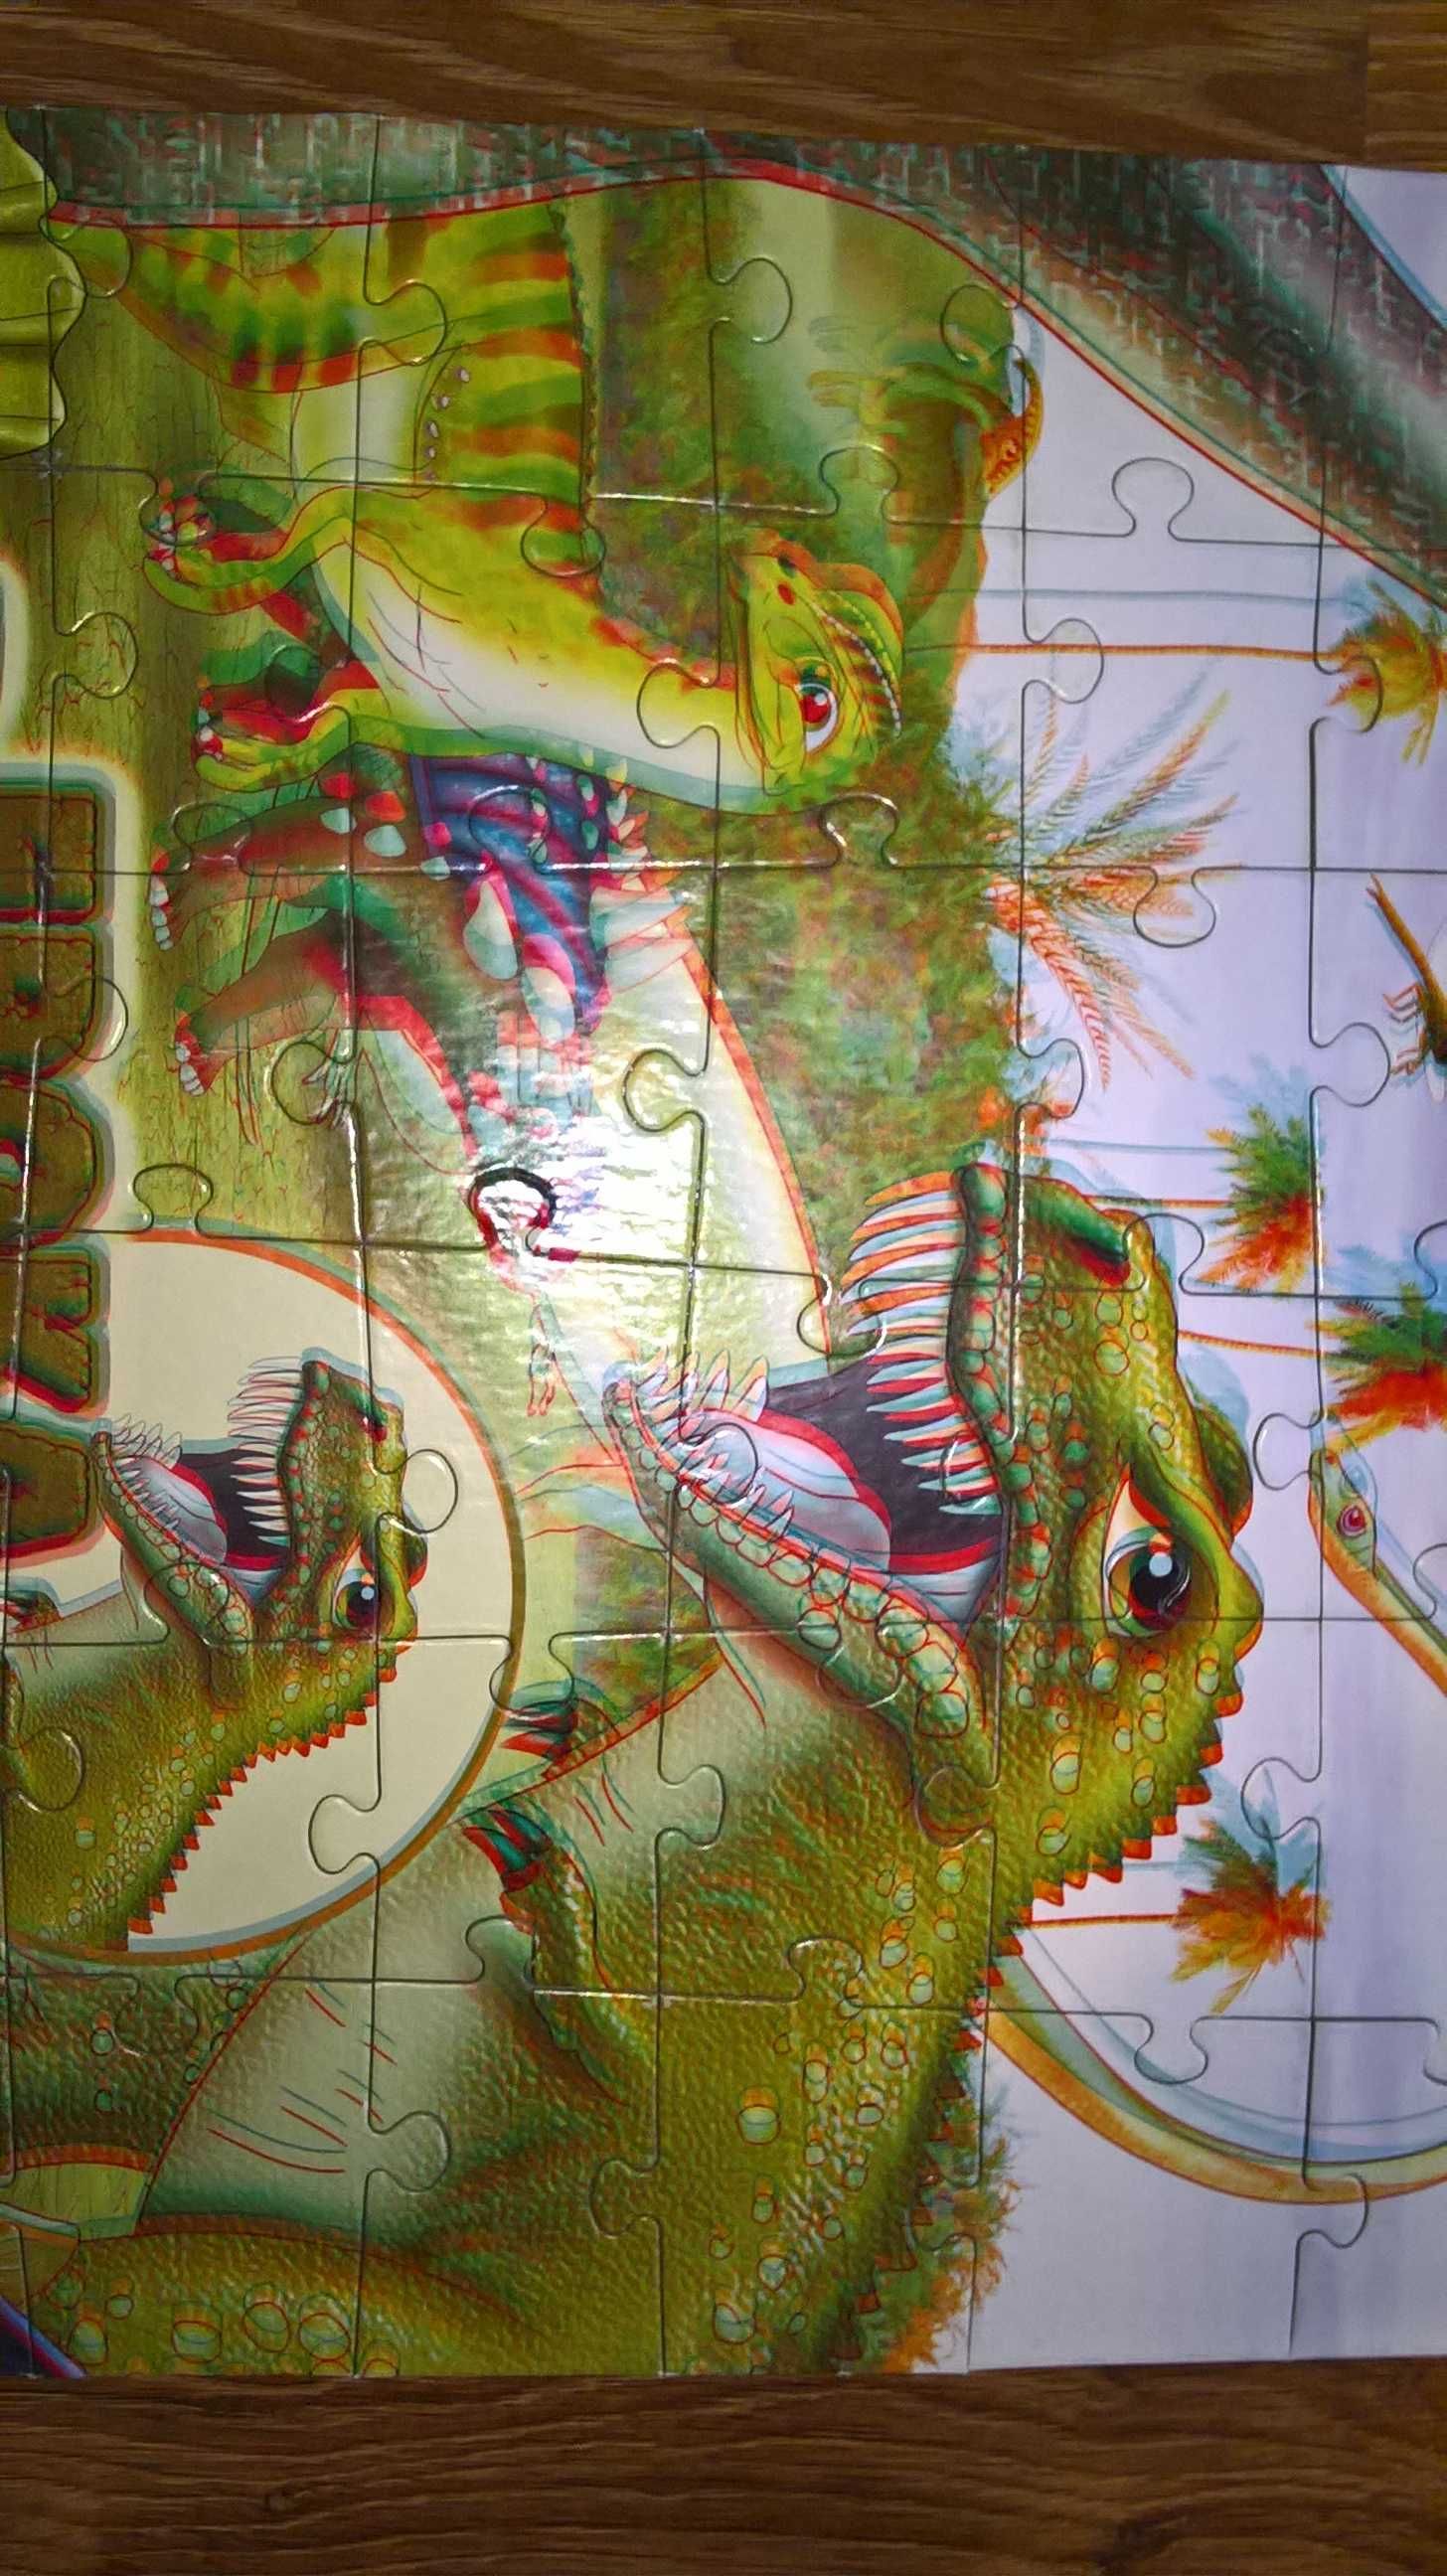 puzzle 3d maxi 60 epoka dinozaurów db